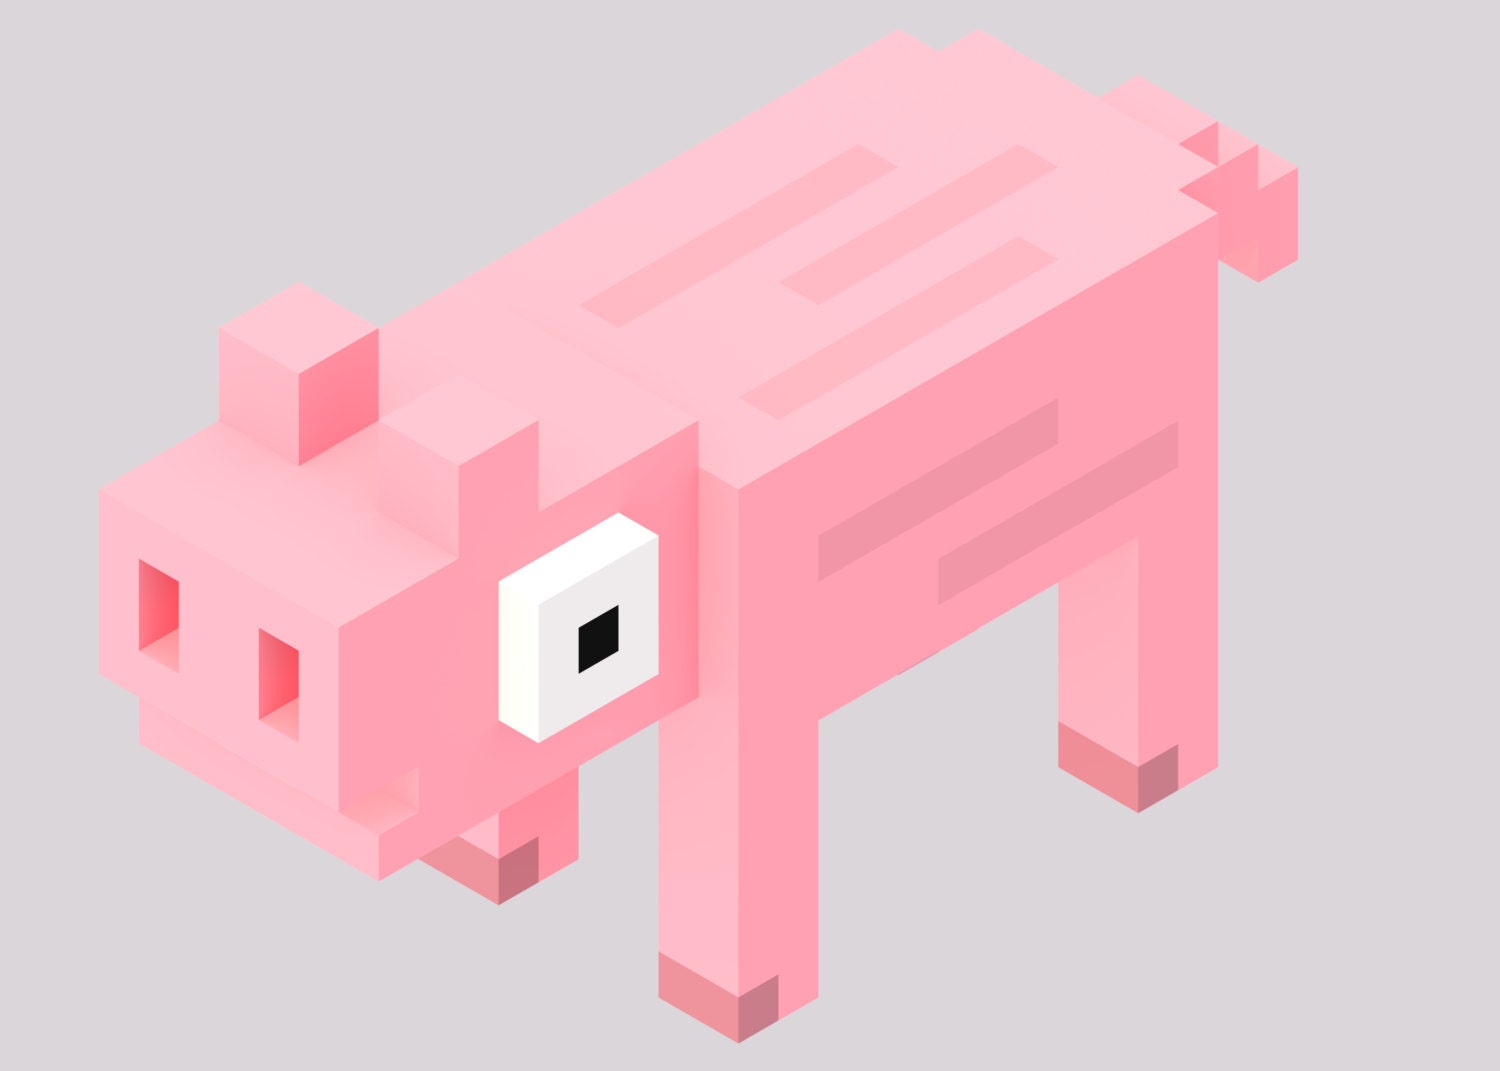 blocky pig simulator 3d